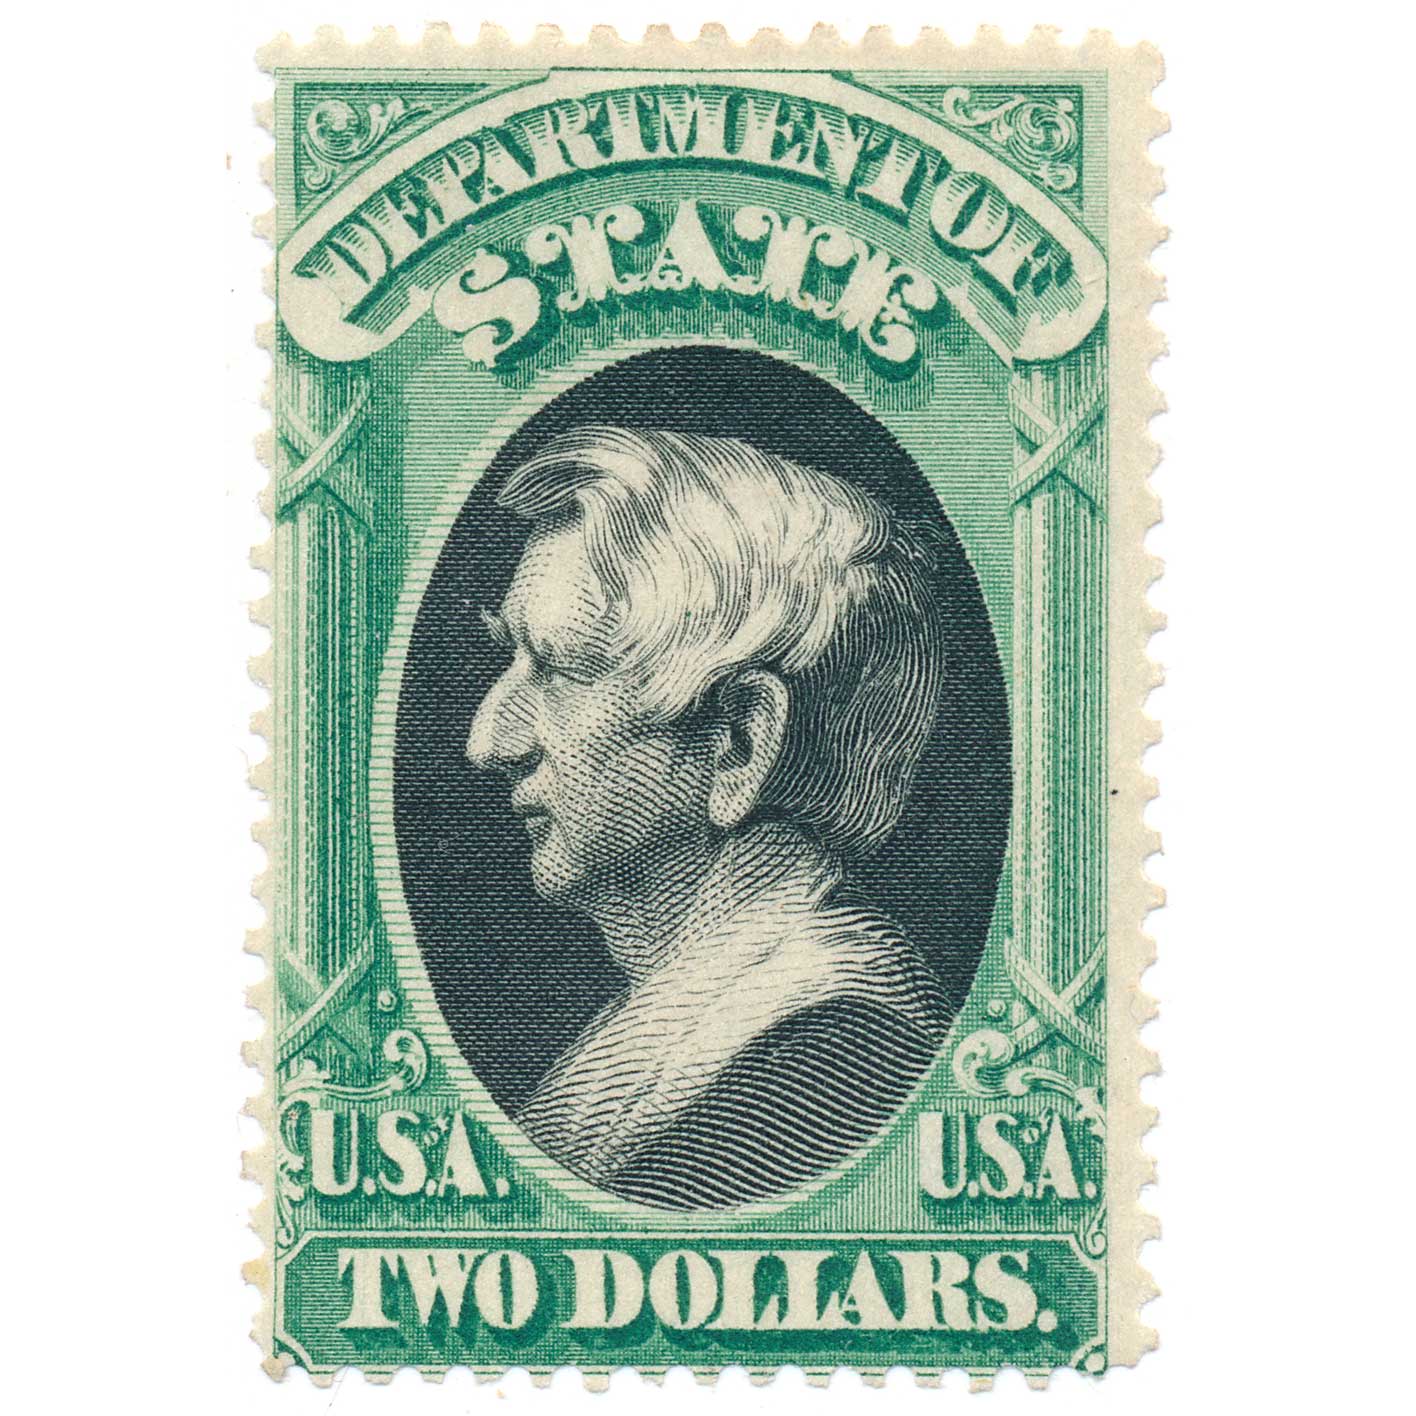 Travelstamps: 1935 GERMANY Semi-Postal Stamps #B69-B78 STATE COSTUMES MNH  OG